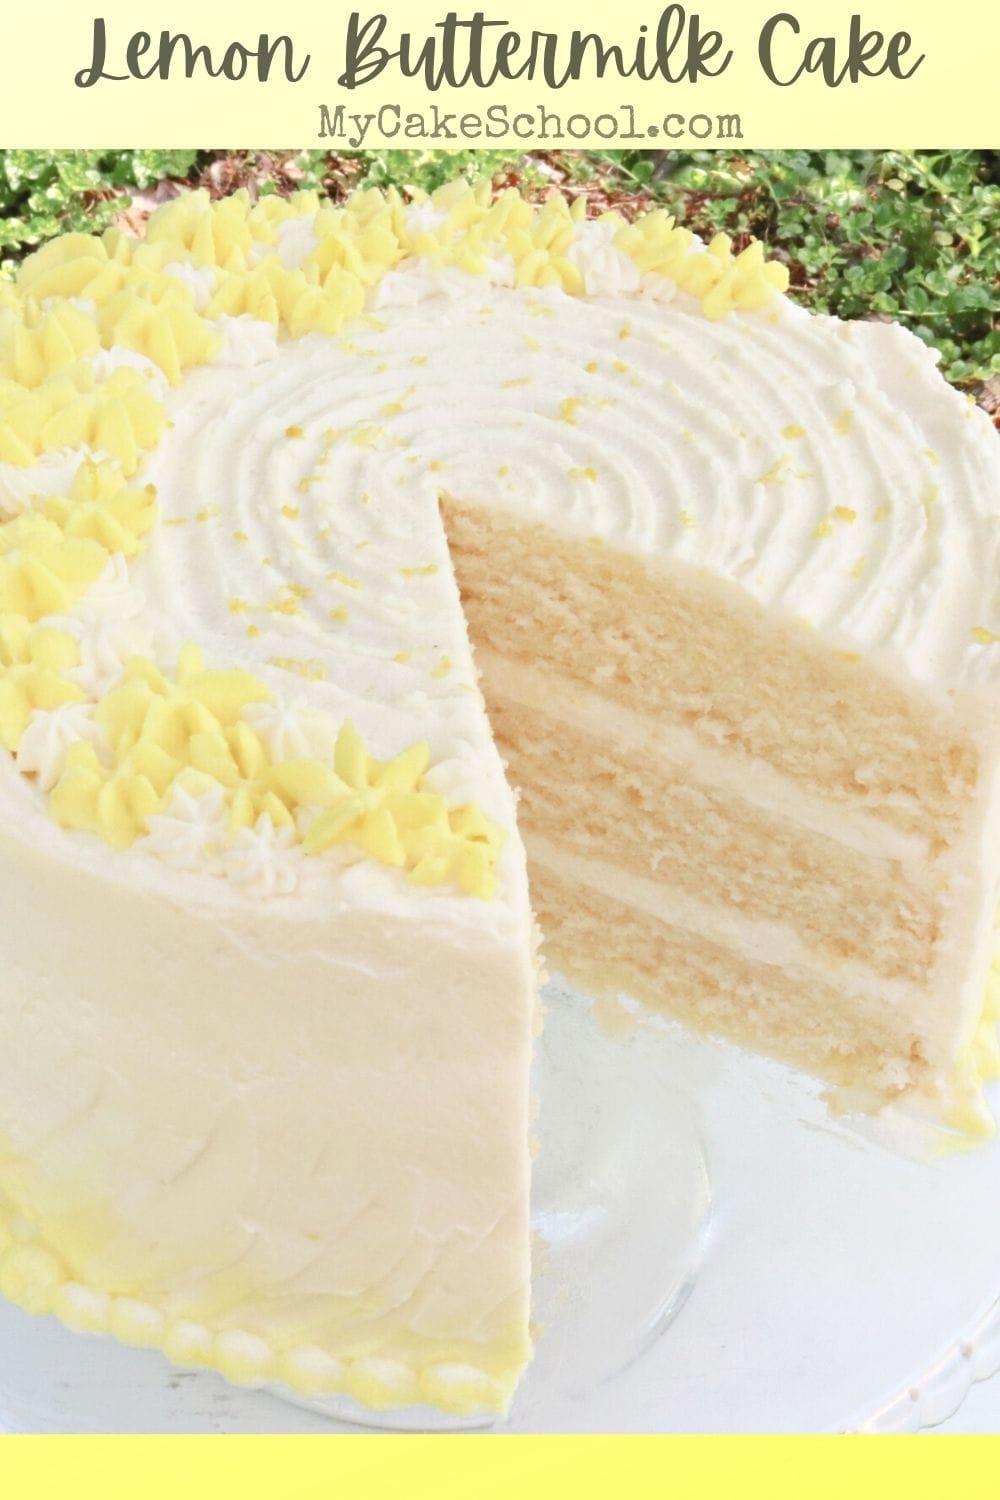 Lemon Buttermilk Cake- So moist and delicious